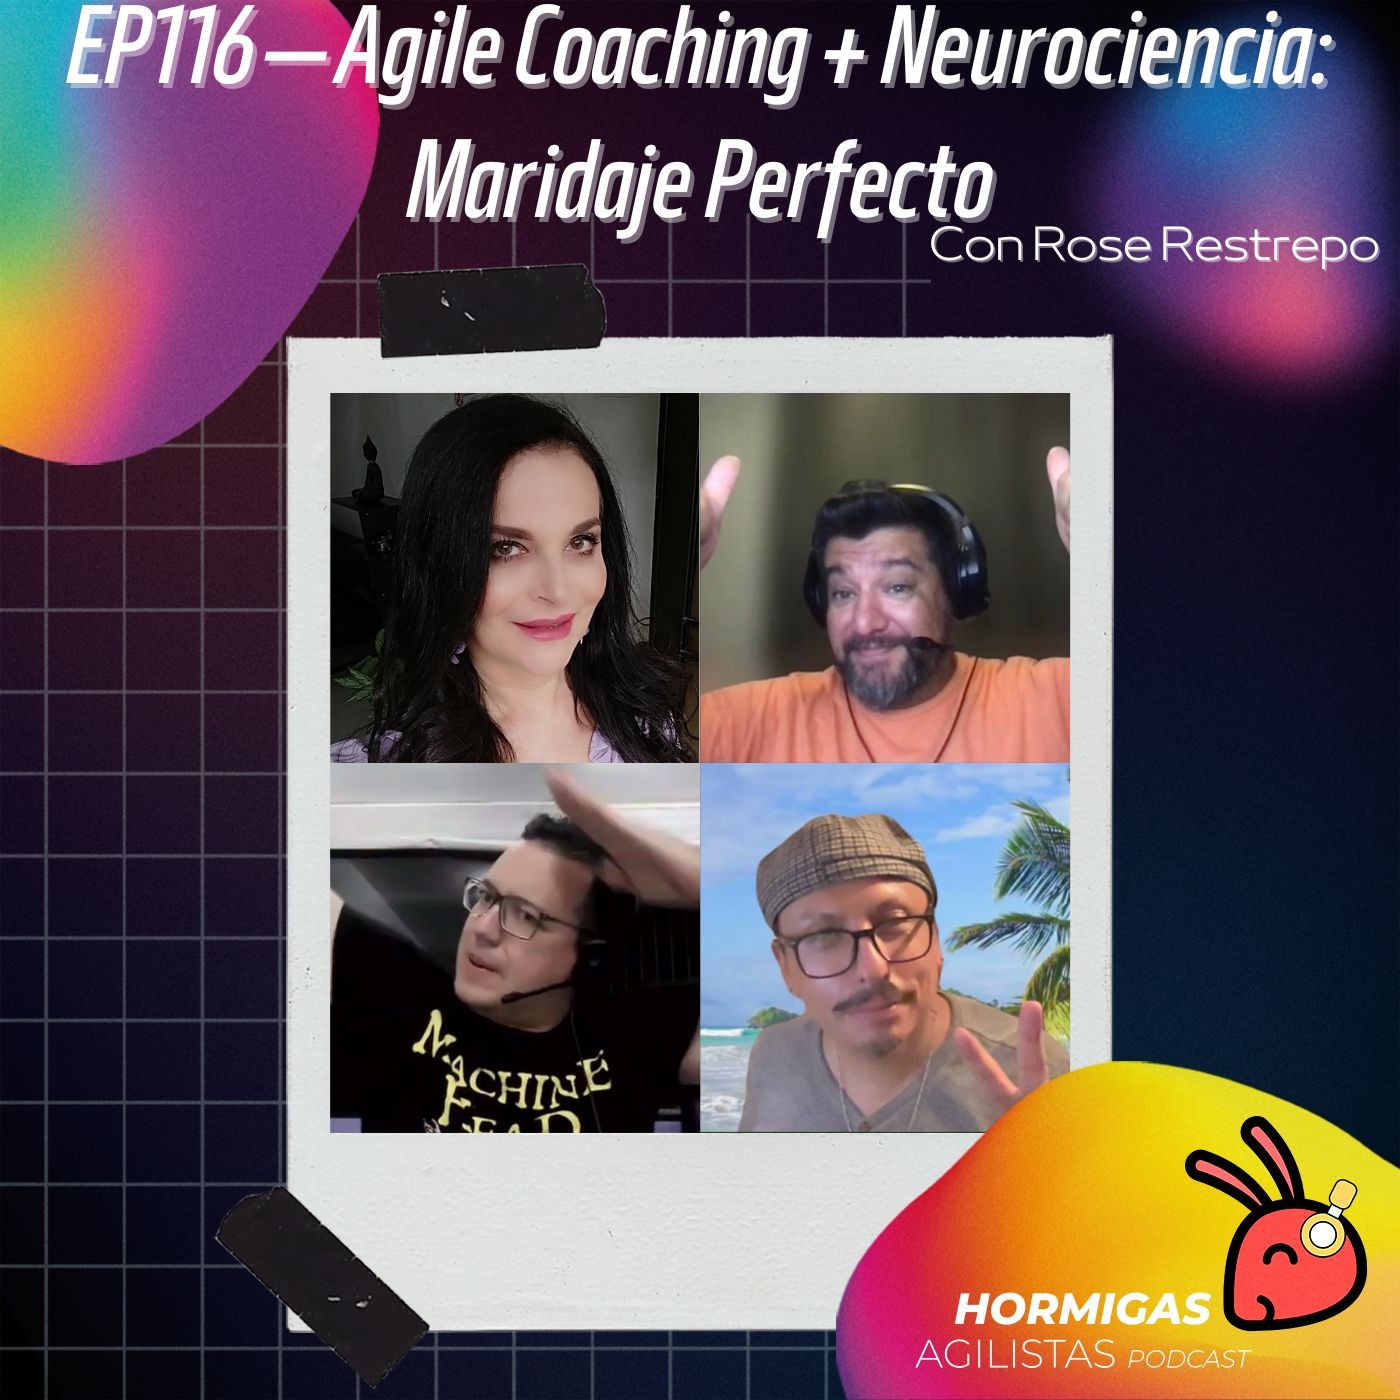 EP116 — Agile Coaching + Neurociencia: Maridaje Perfecto, con Rose Restrepo